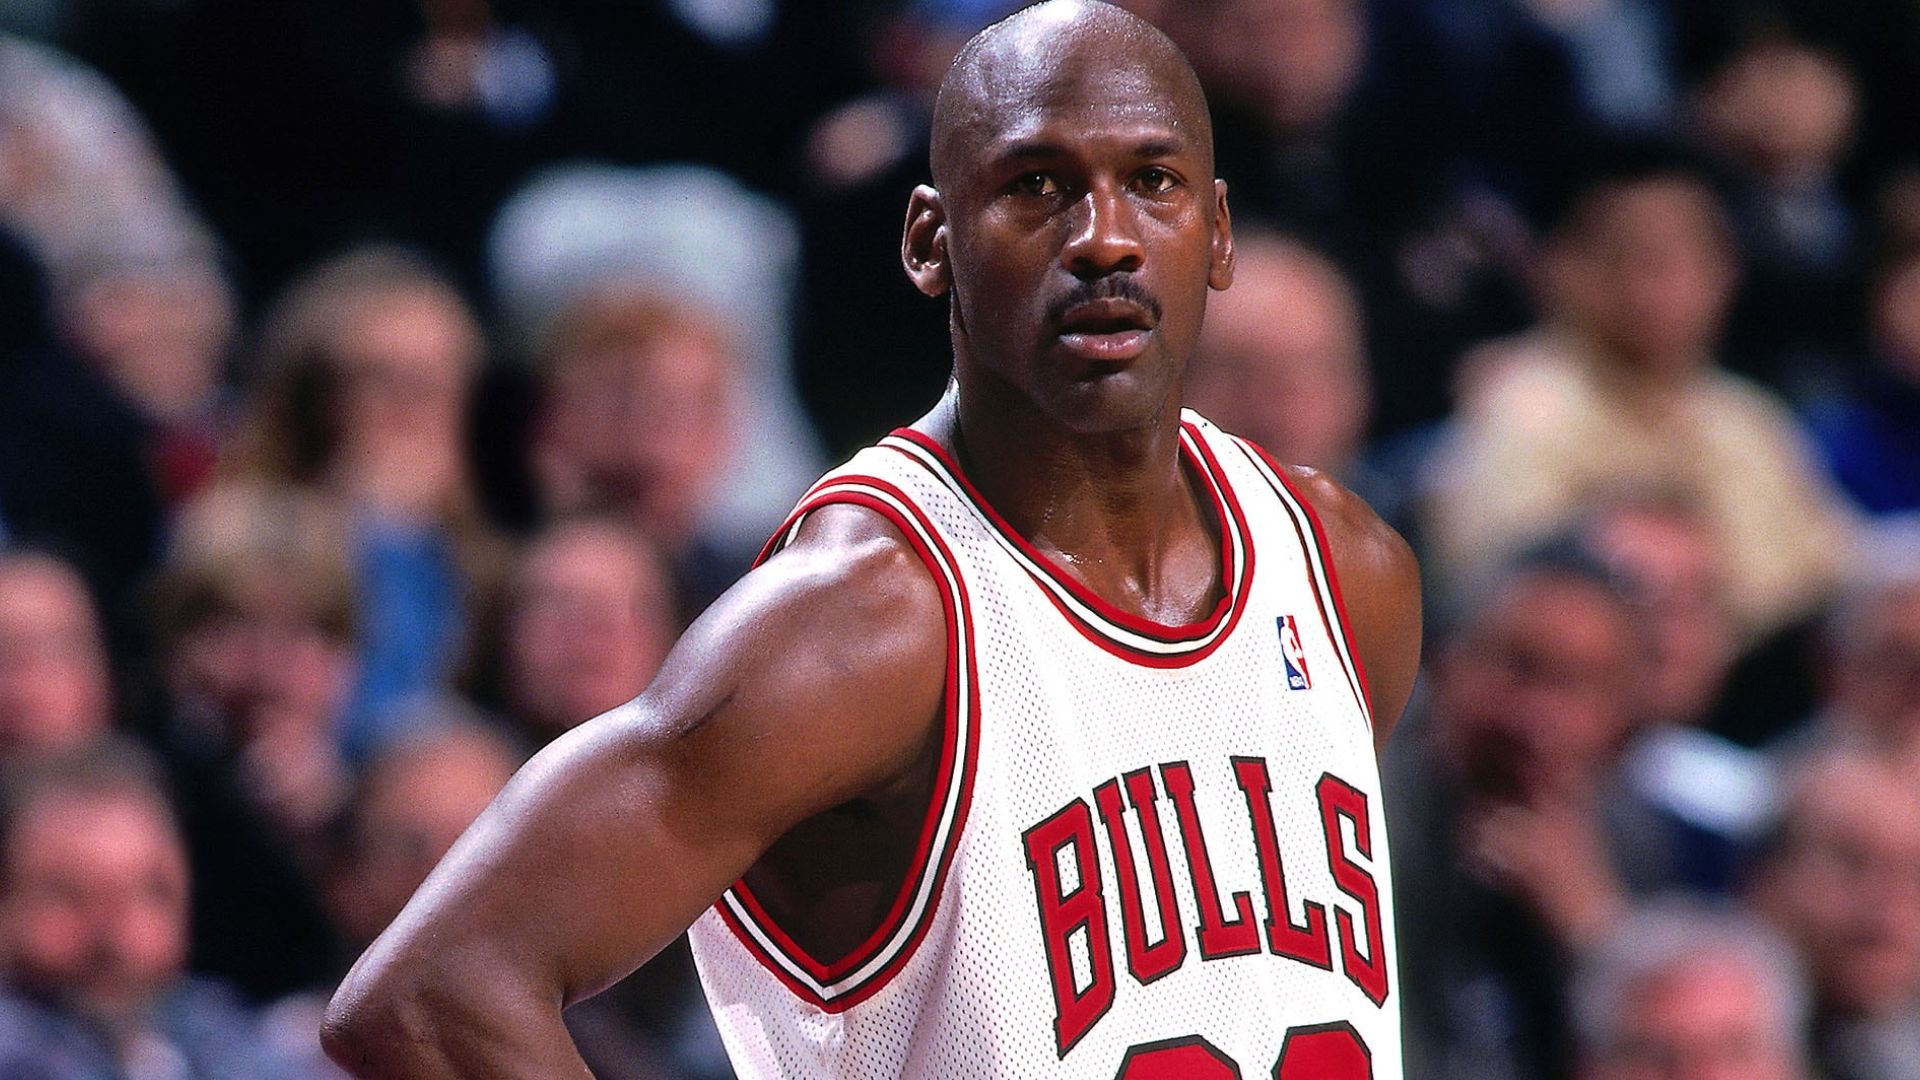 Michael Jordan In Bulls Unifrom